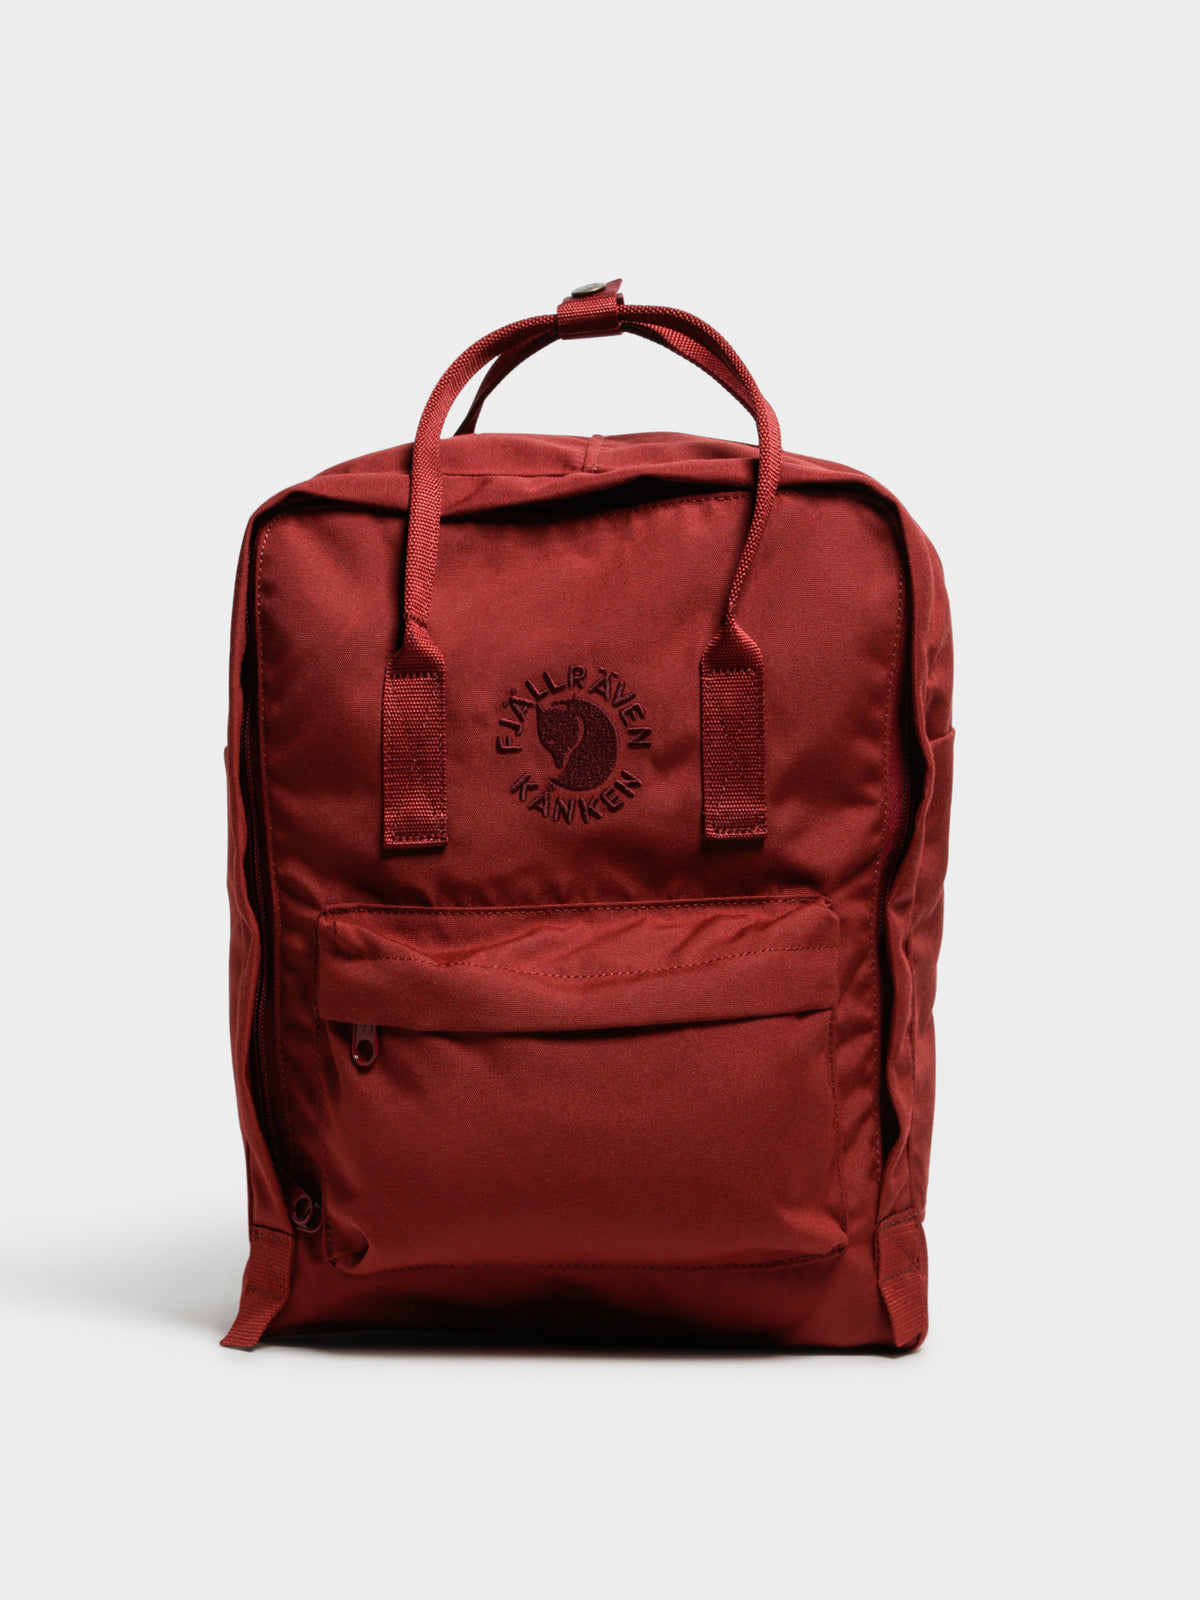 Re-Kanken Backpack in Ox Red